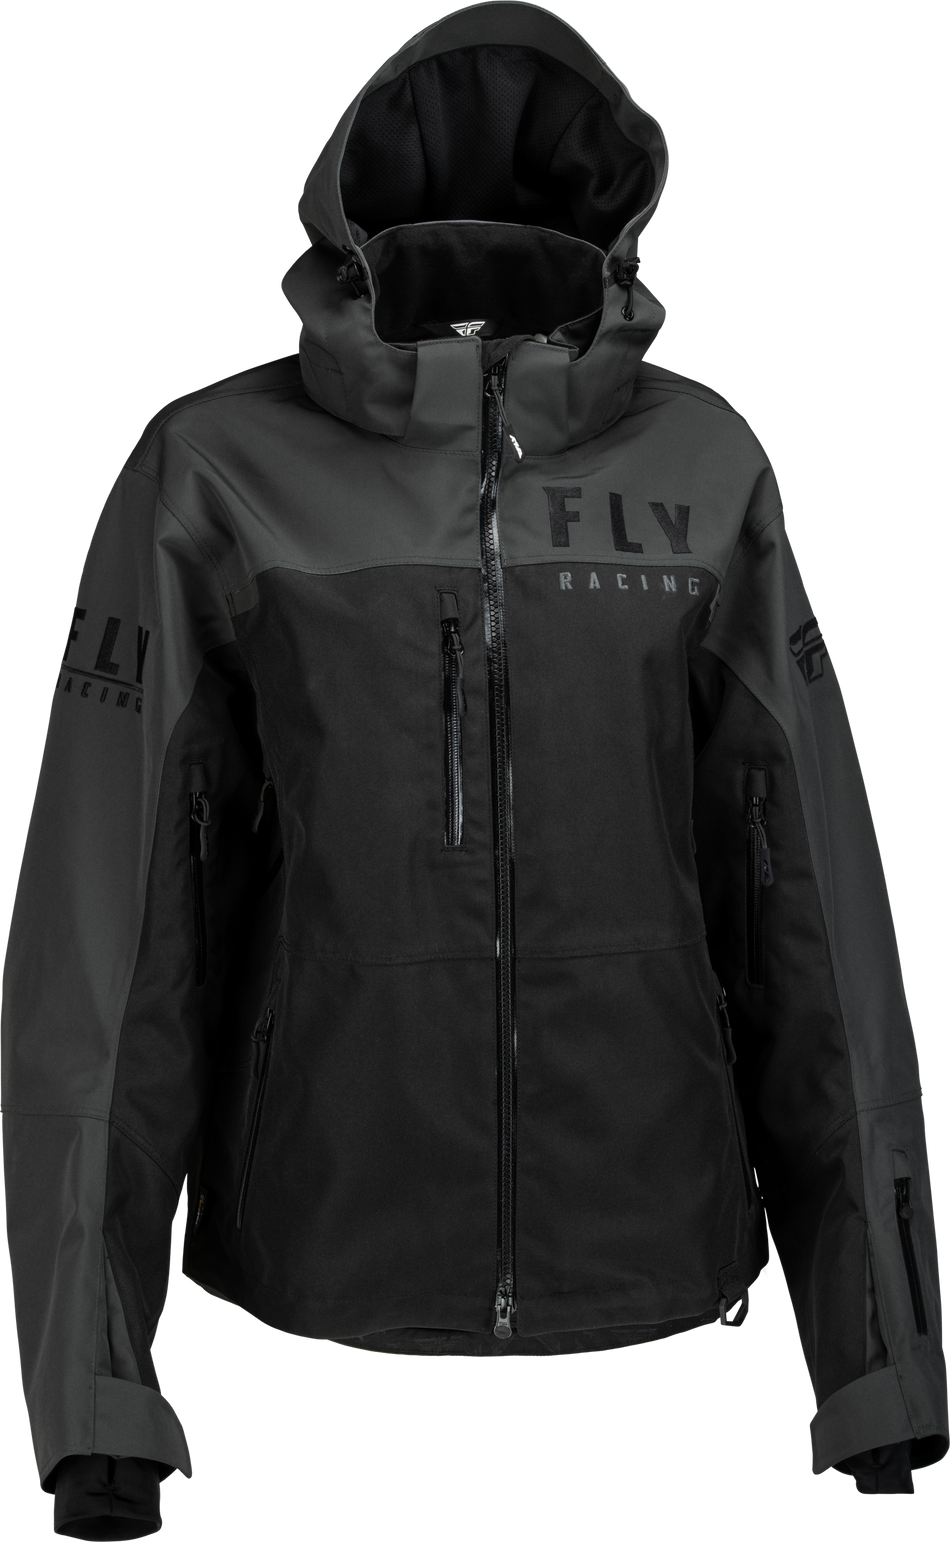 FLY RACING Women's Carbon Jacket Black/Grey 2x 470-45002X